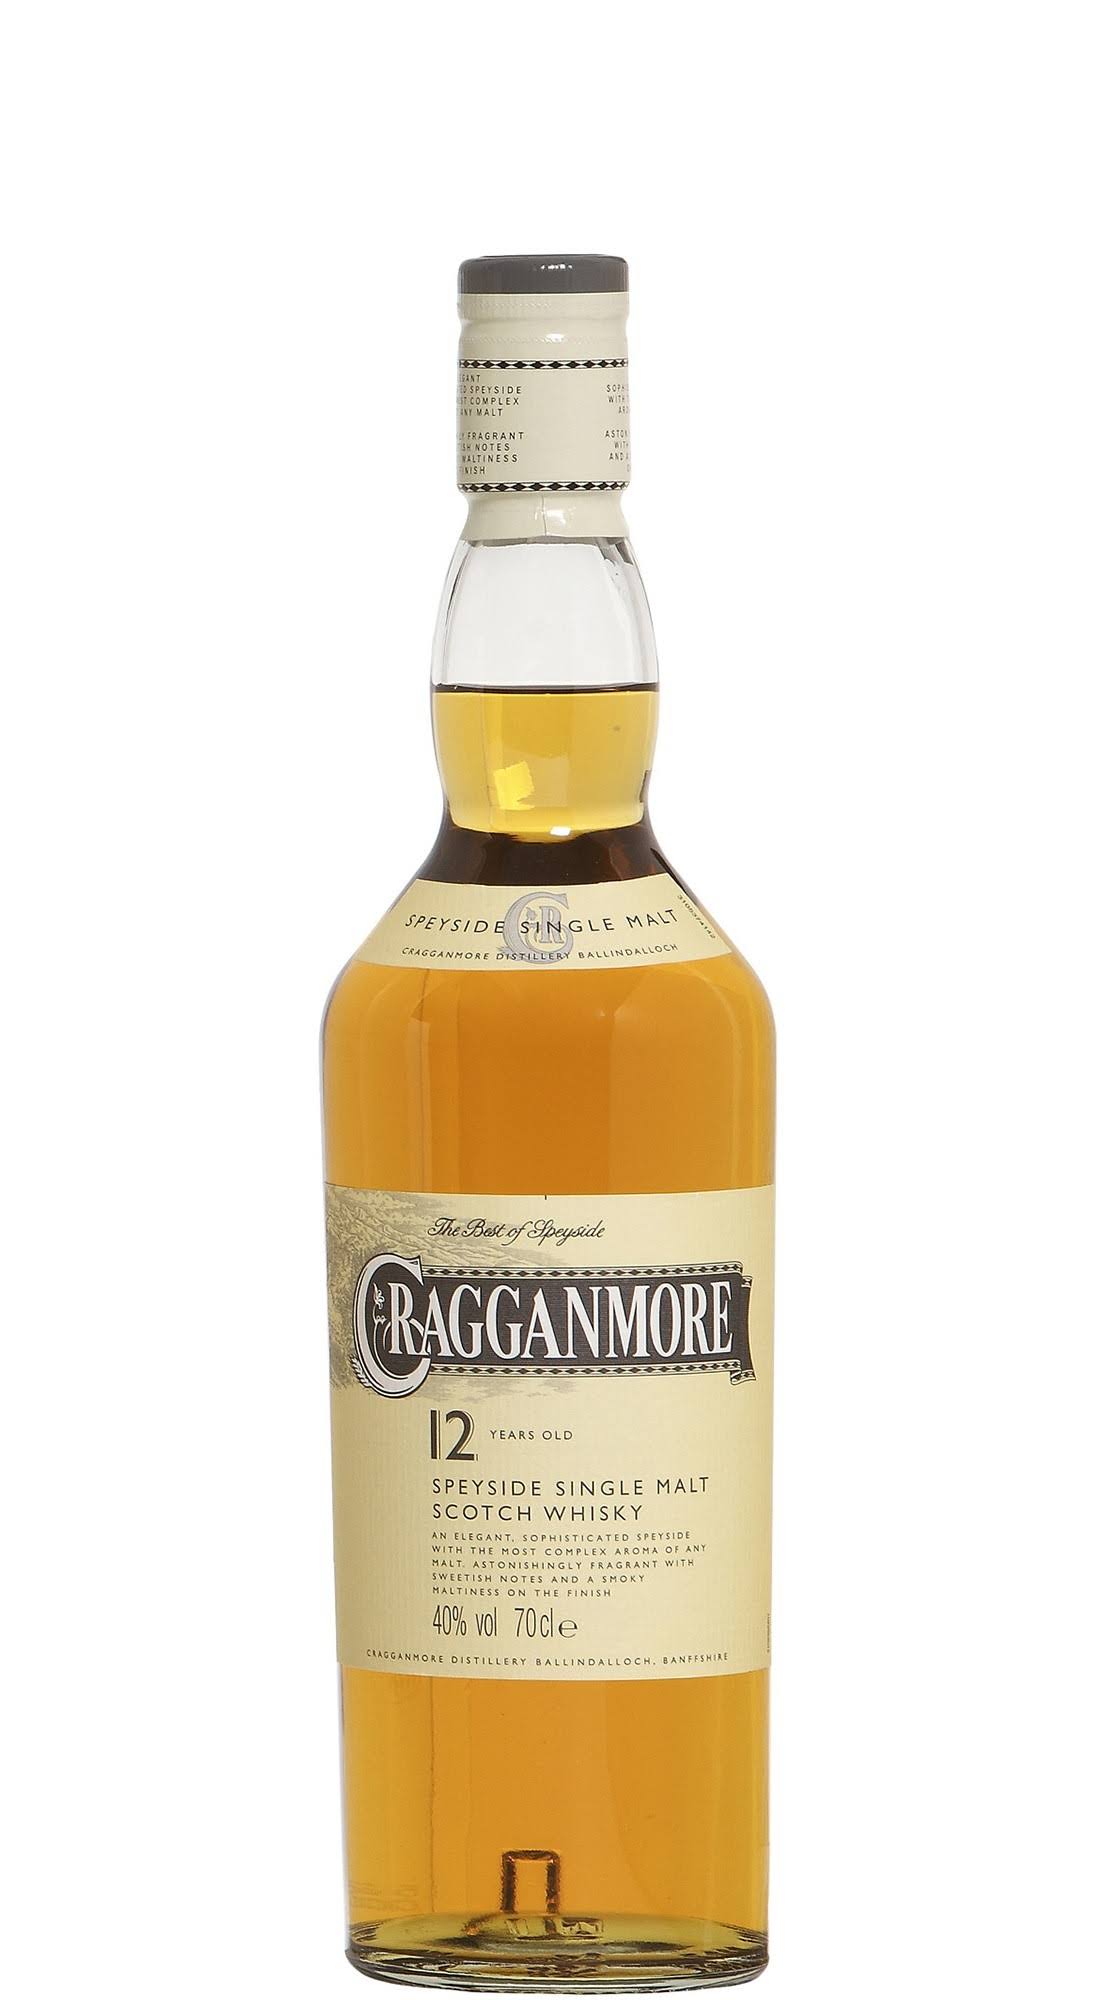 Cragganmore 12 Speyside Single Malt Scotch Whisky - 70cl